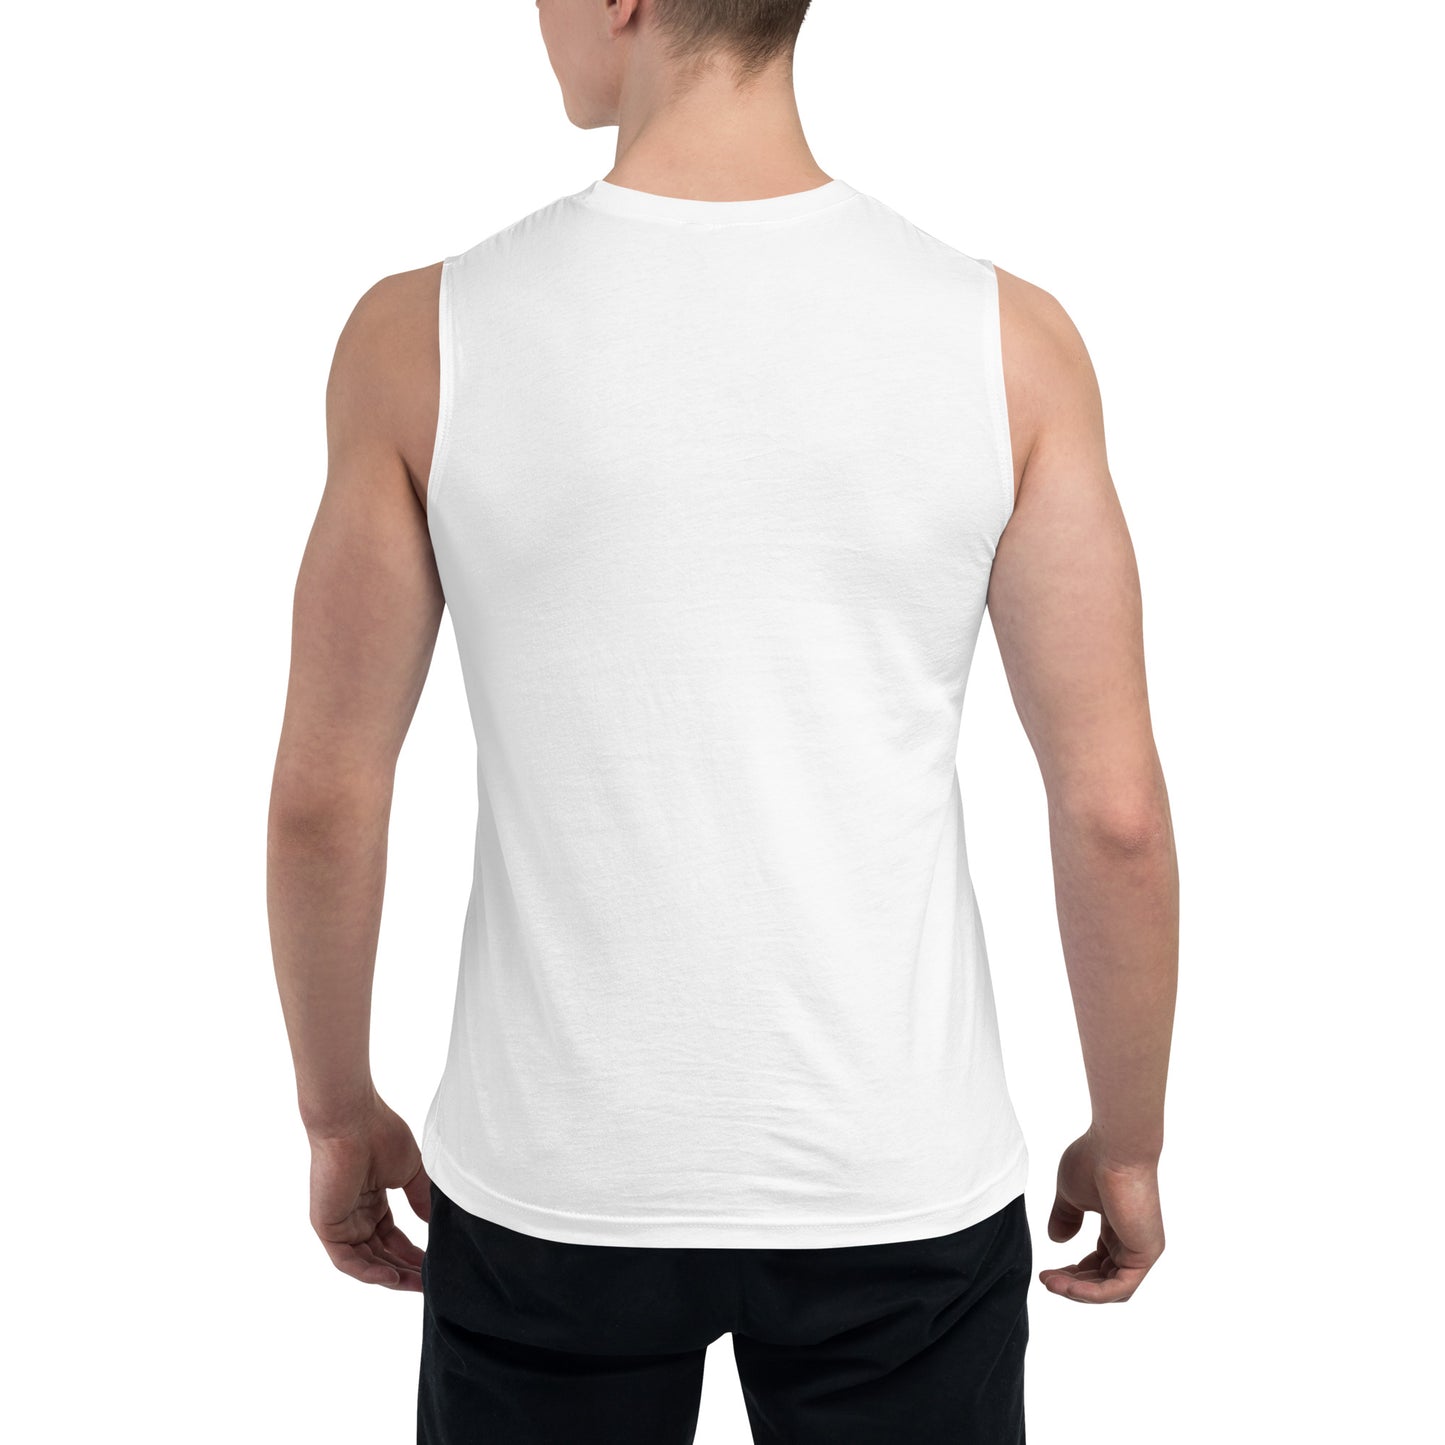 Sleeveless Muscle Shirt : Starflower - Black w/ Olive print